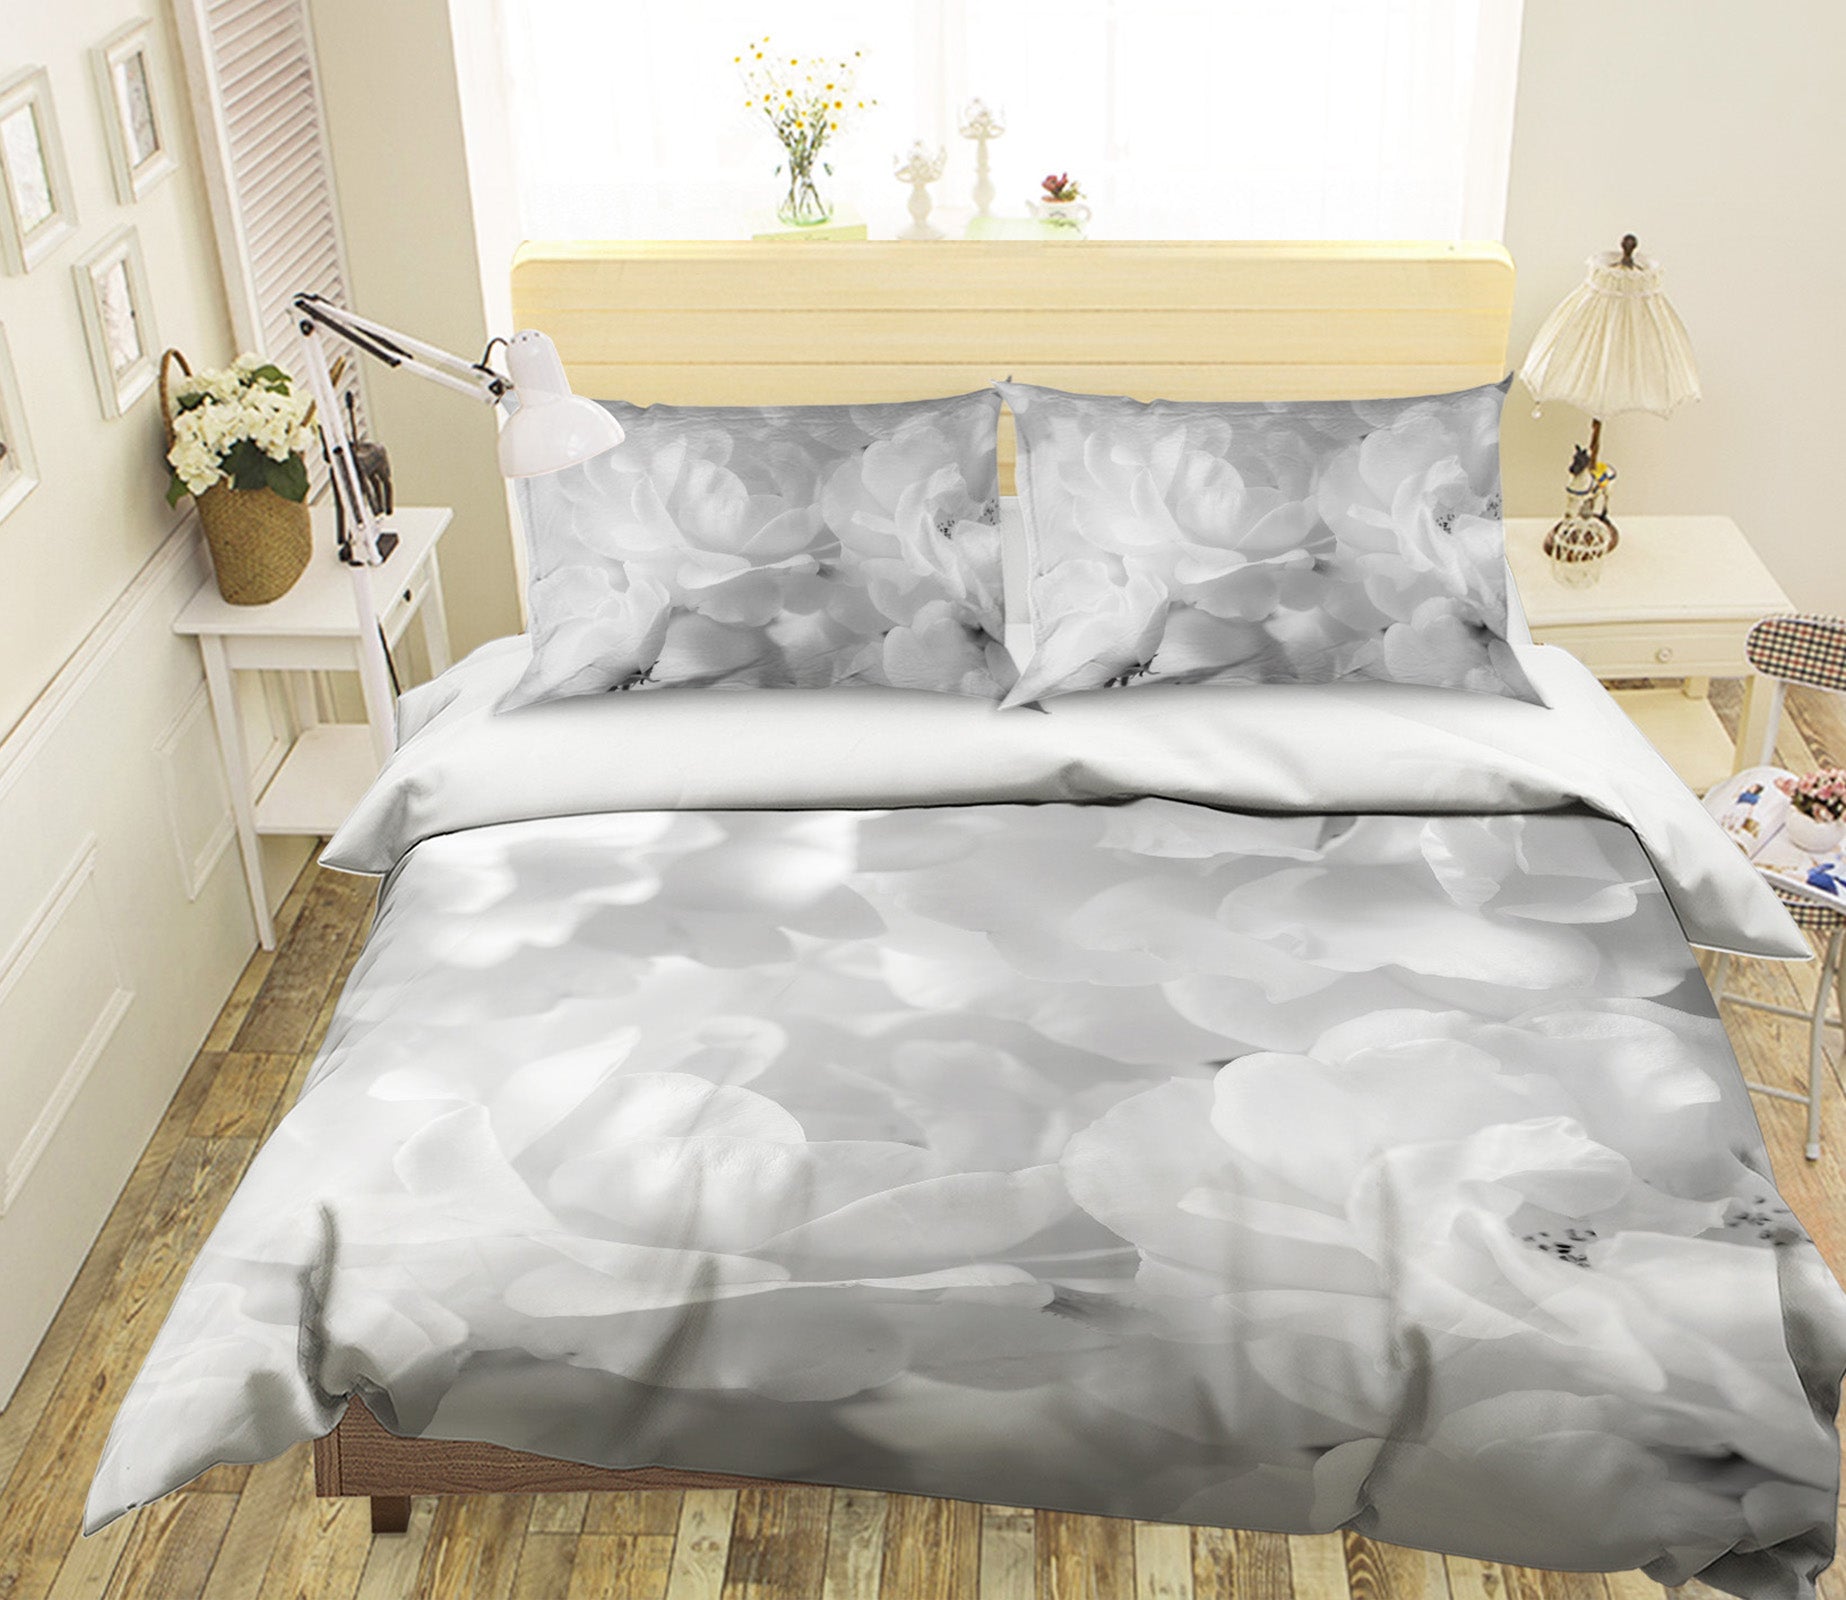 3D Petal Art 7152 Assaf Frank Bedding Bed Pillowcases Quilt Cover Duvet Cover